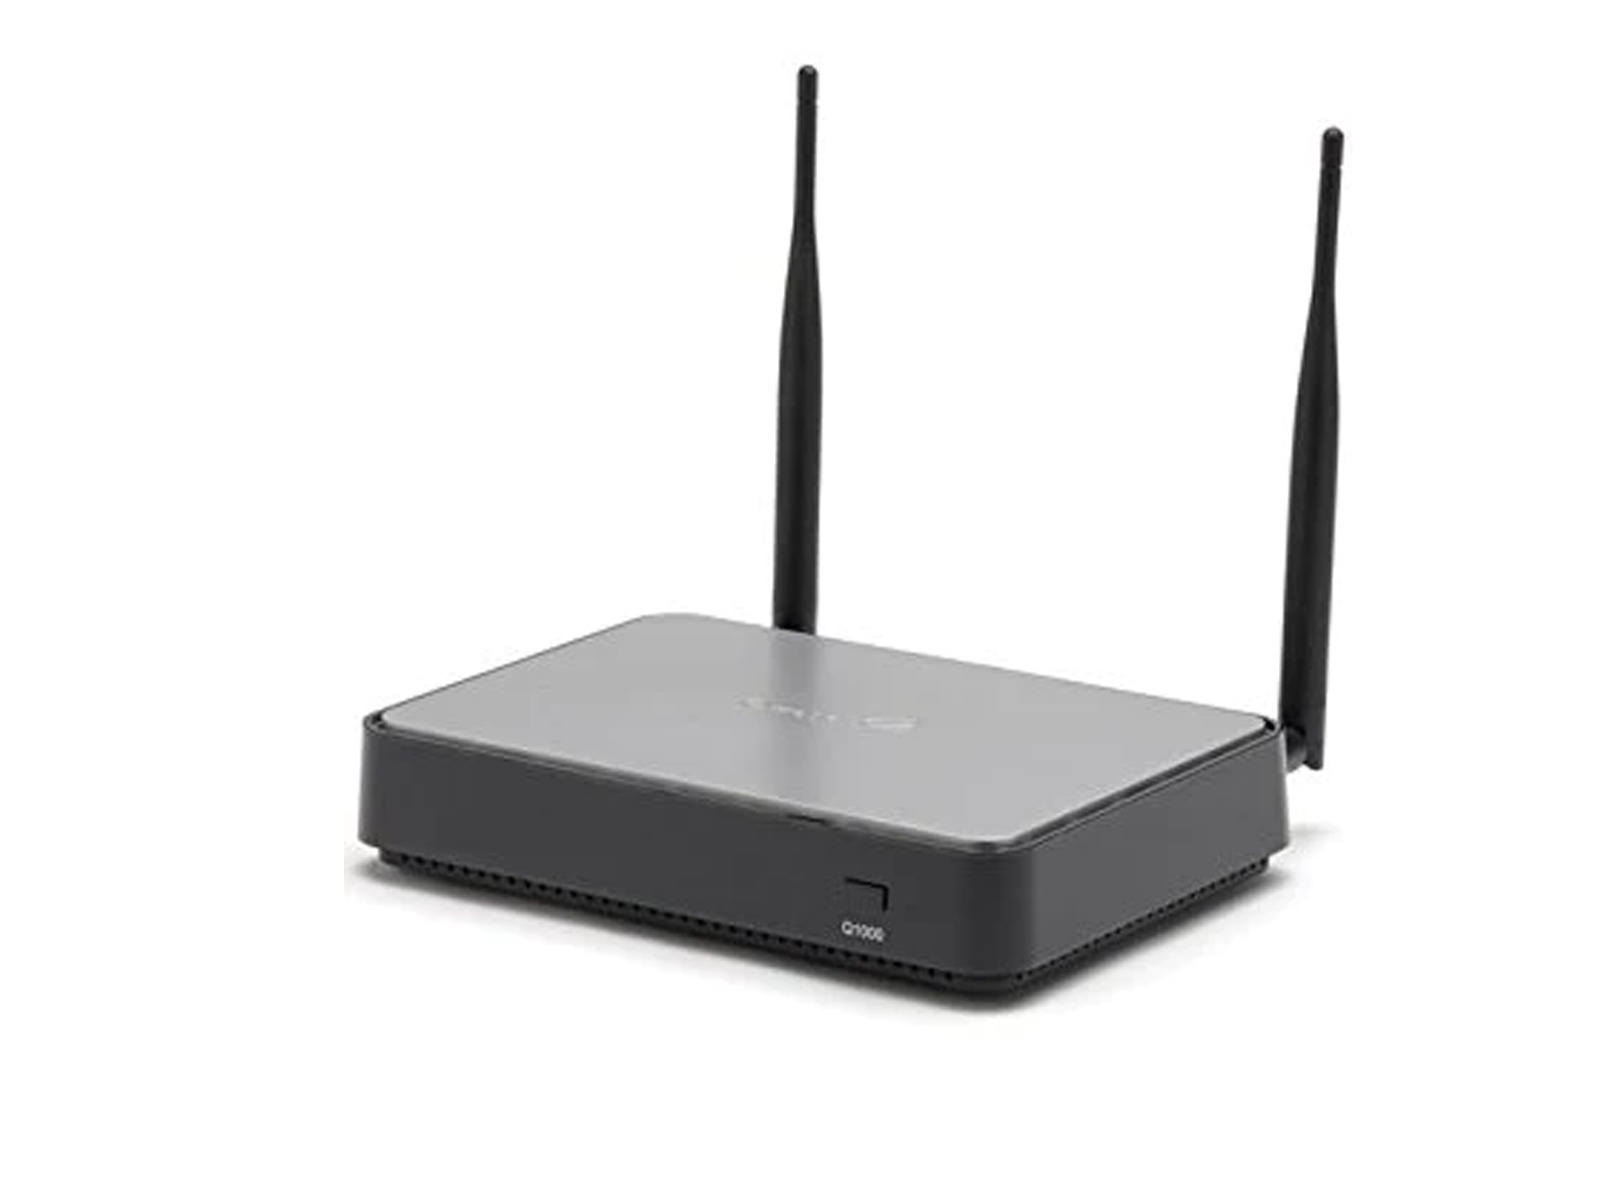 ActionTec Q1000 4 Port Gigabit Wireless-N Router Modem CenturyLink